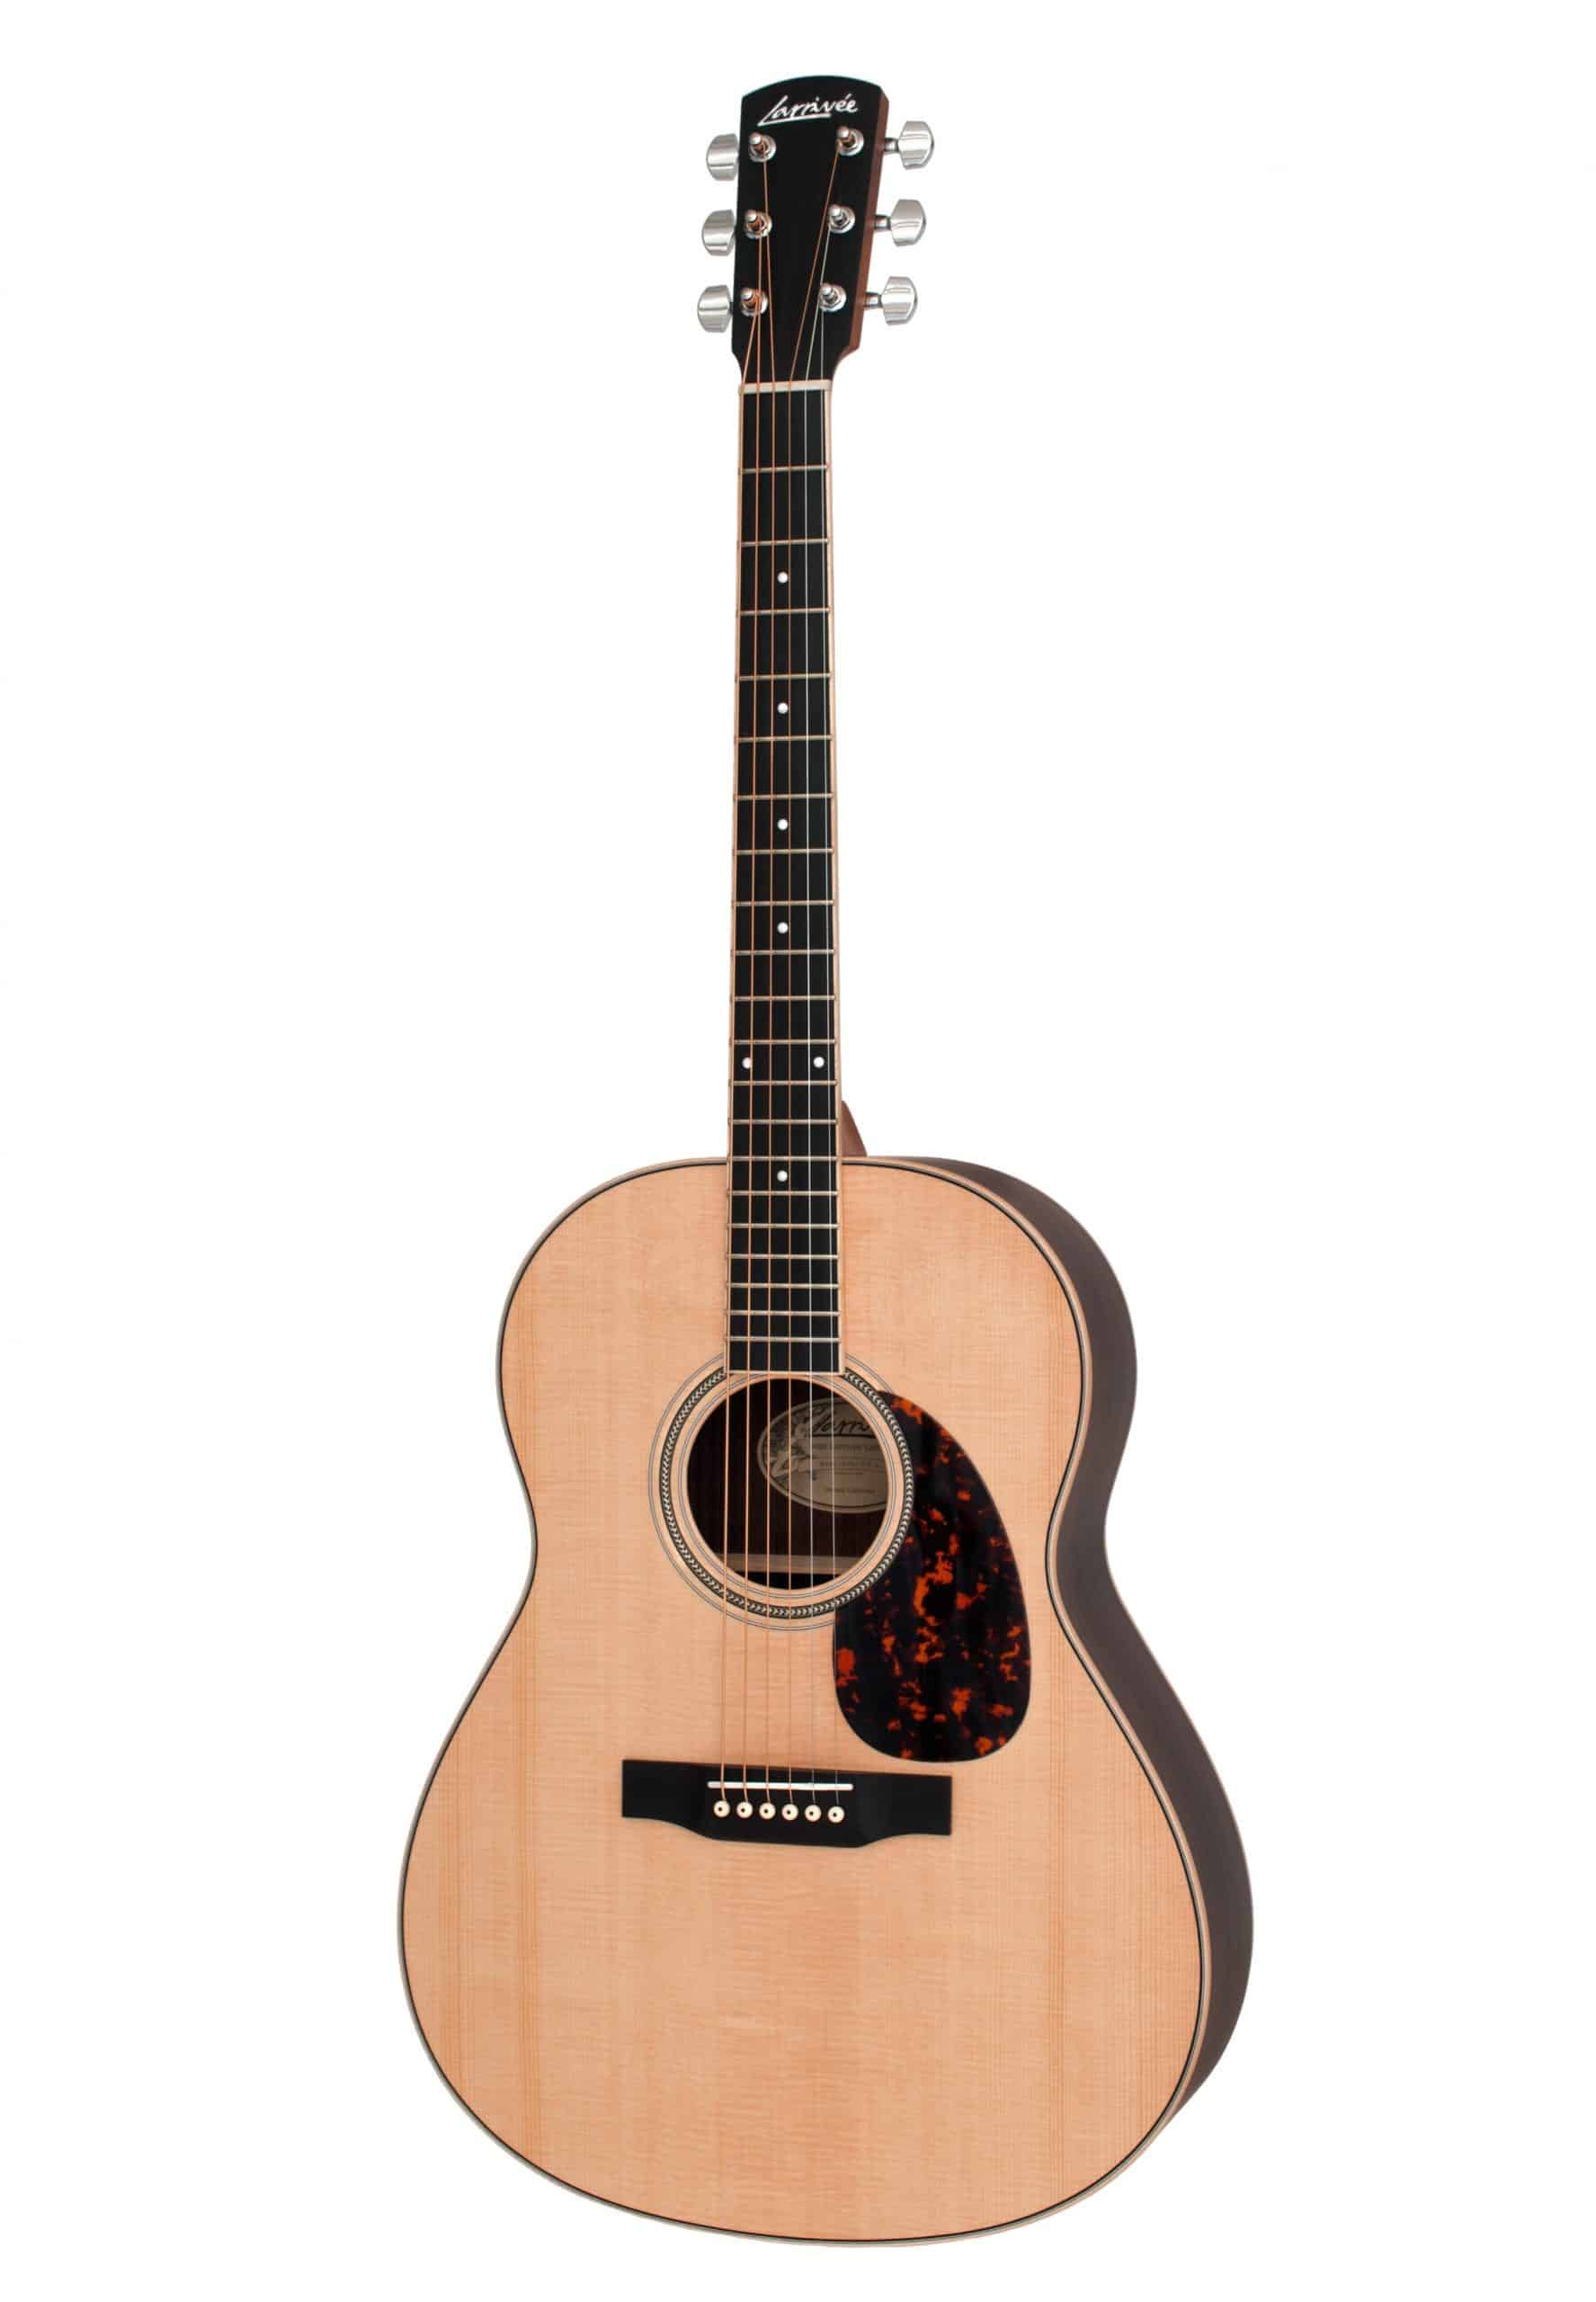 img src="/western-guitar" alt="Larrivee L-03R Rosewood Western Guitar"